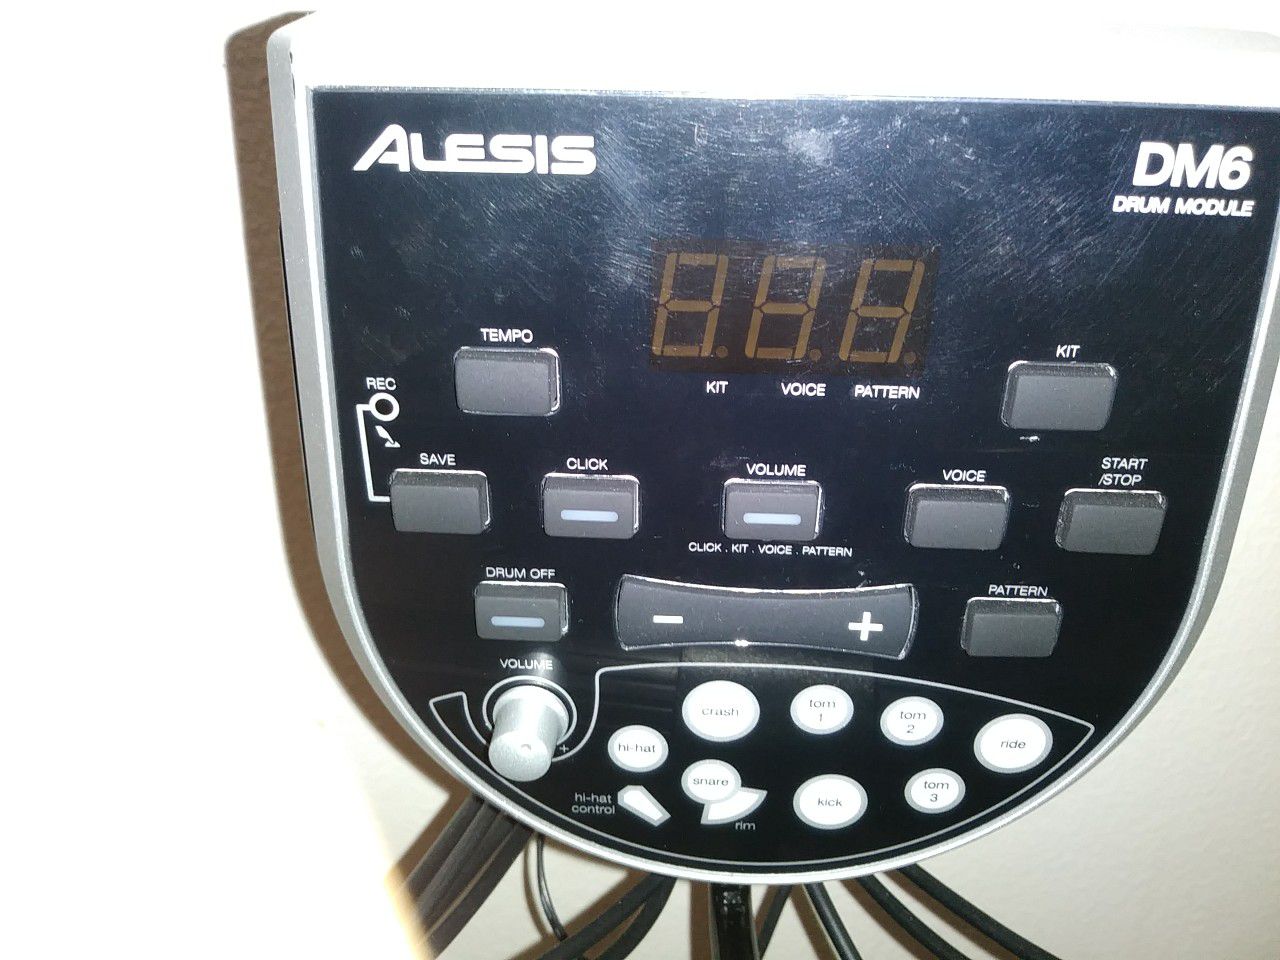 Alesis electric drum set works great with speakers